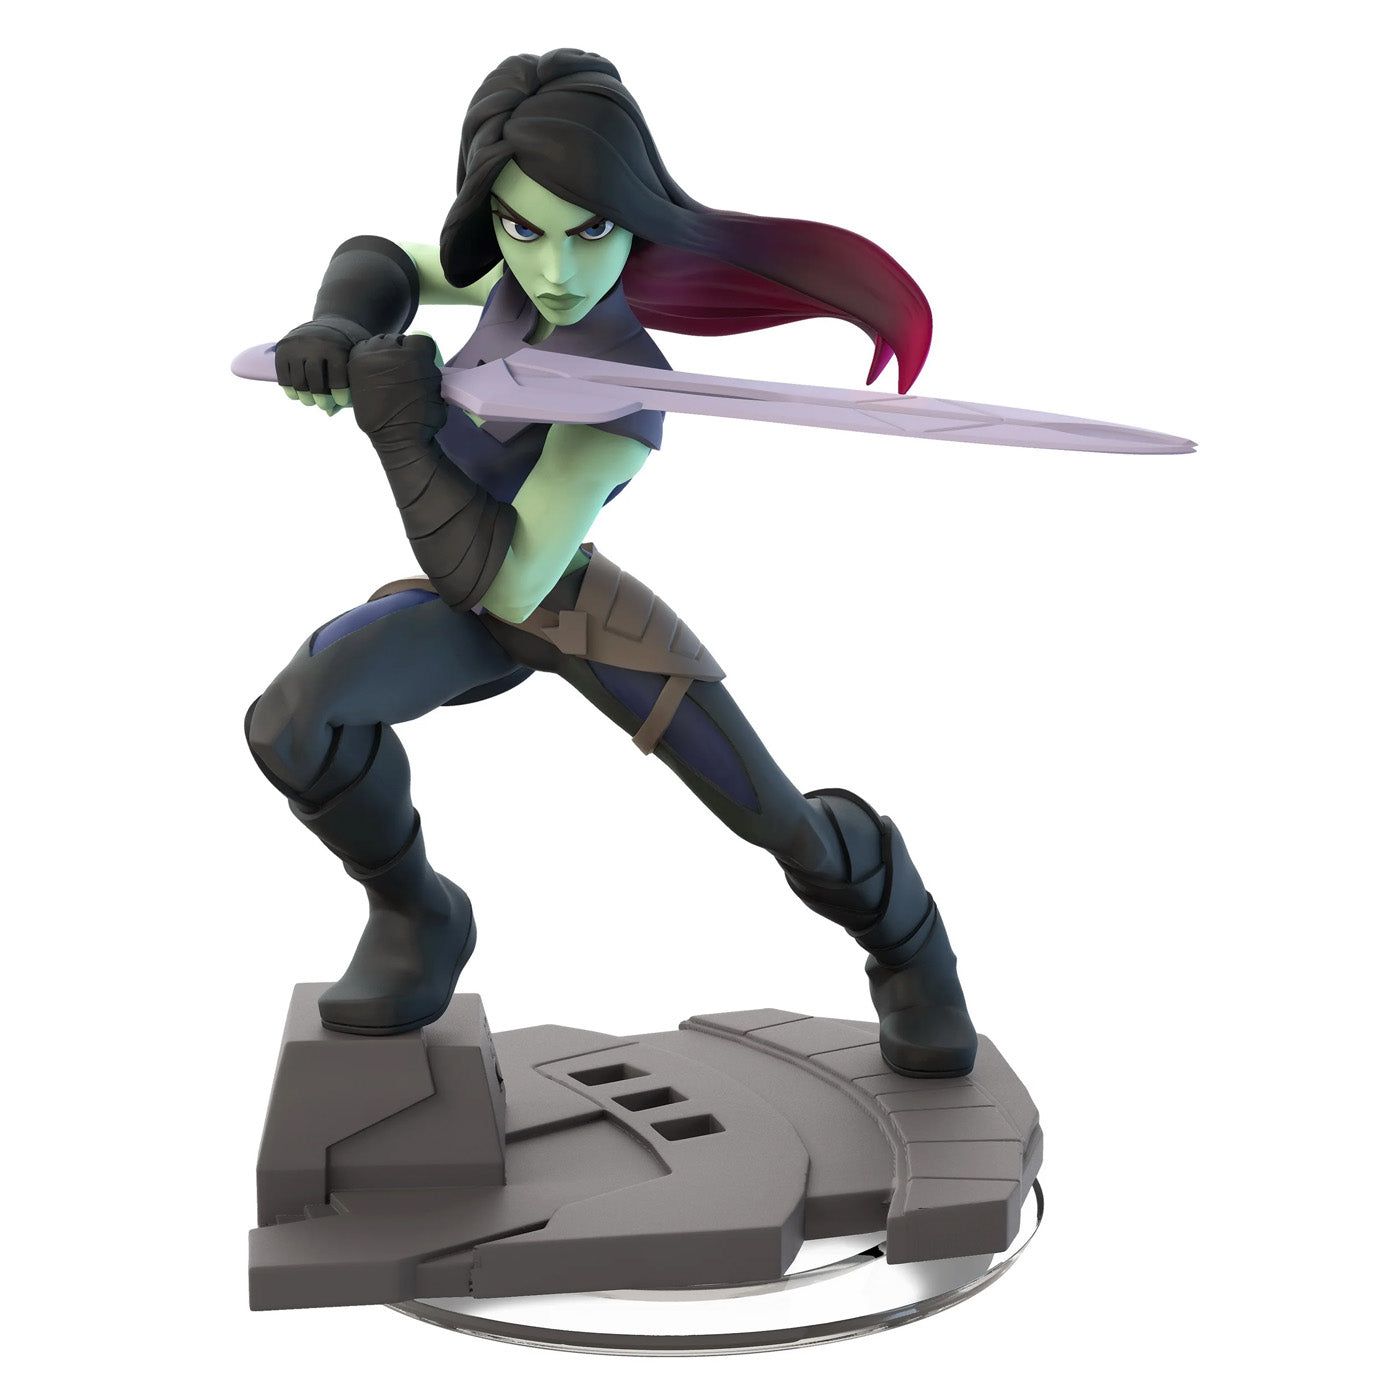 Disney Infinity 2.0 Character: Gamora